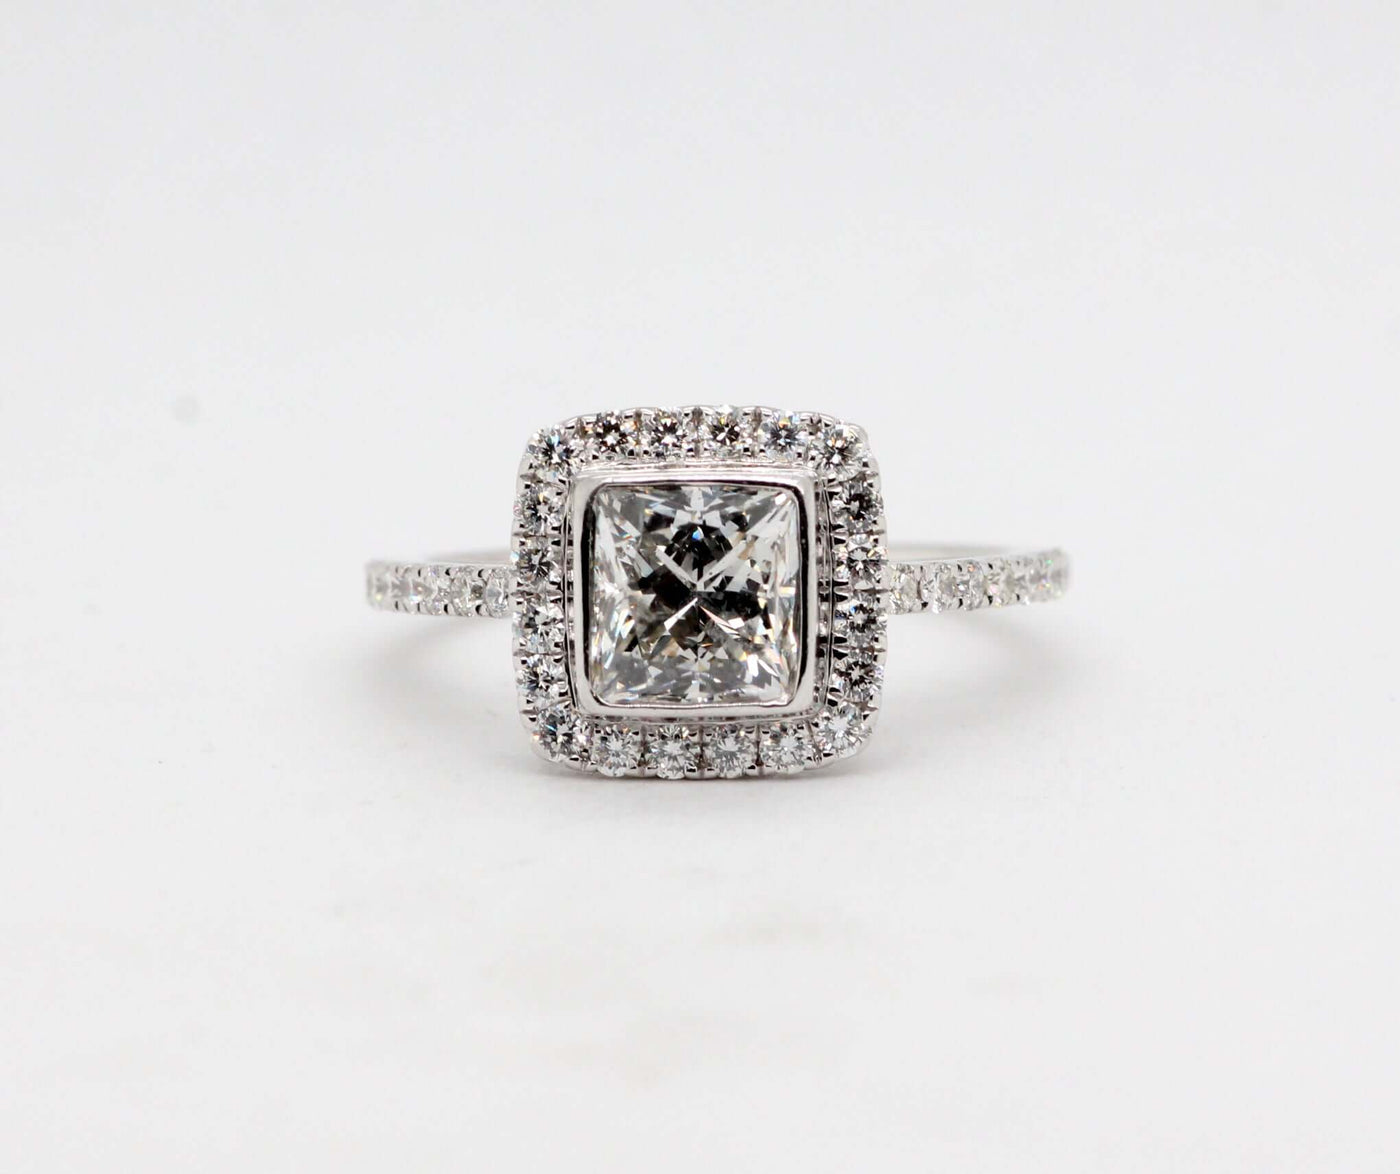 18KW 2.16 Cttw Diamond Halo Engagement Ring